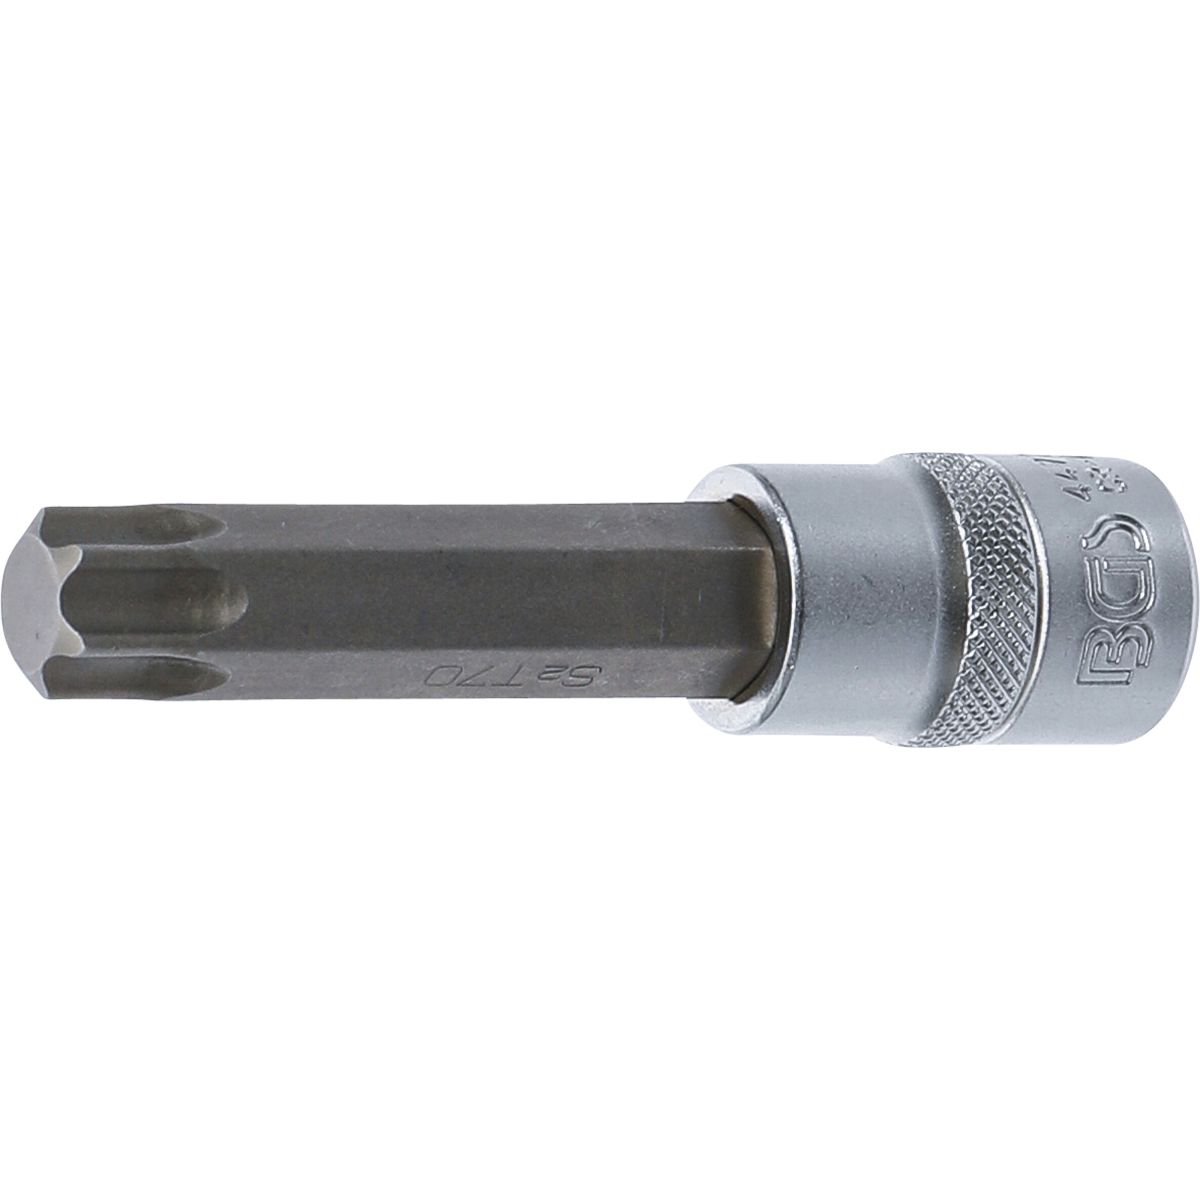 Bit-Einsatz | Länge 100 mm | Antrieb Innenvierkant 12,5 mm (1/2") | T-Profil (für Torx) T70